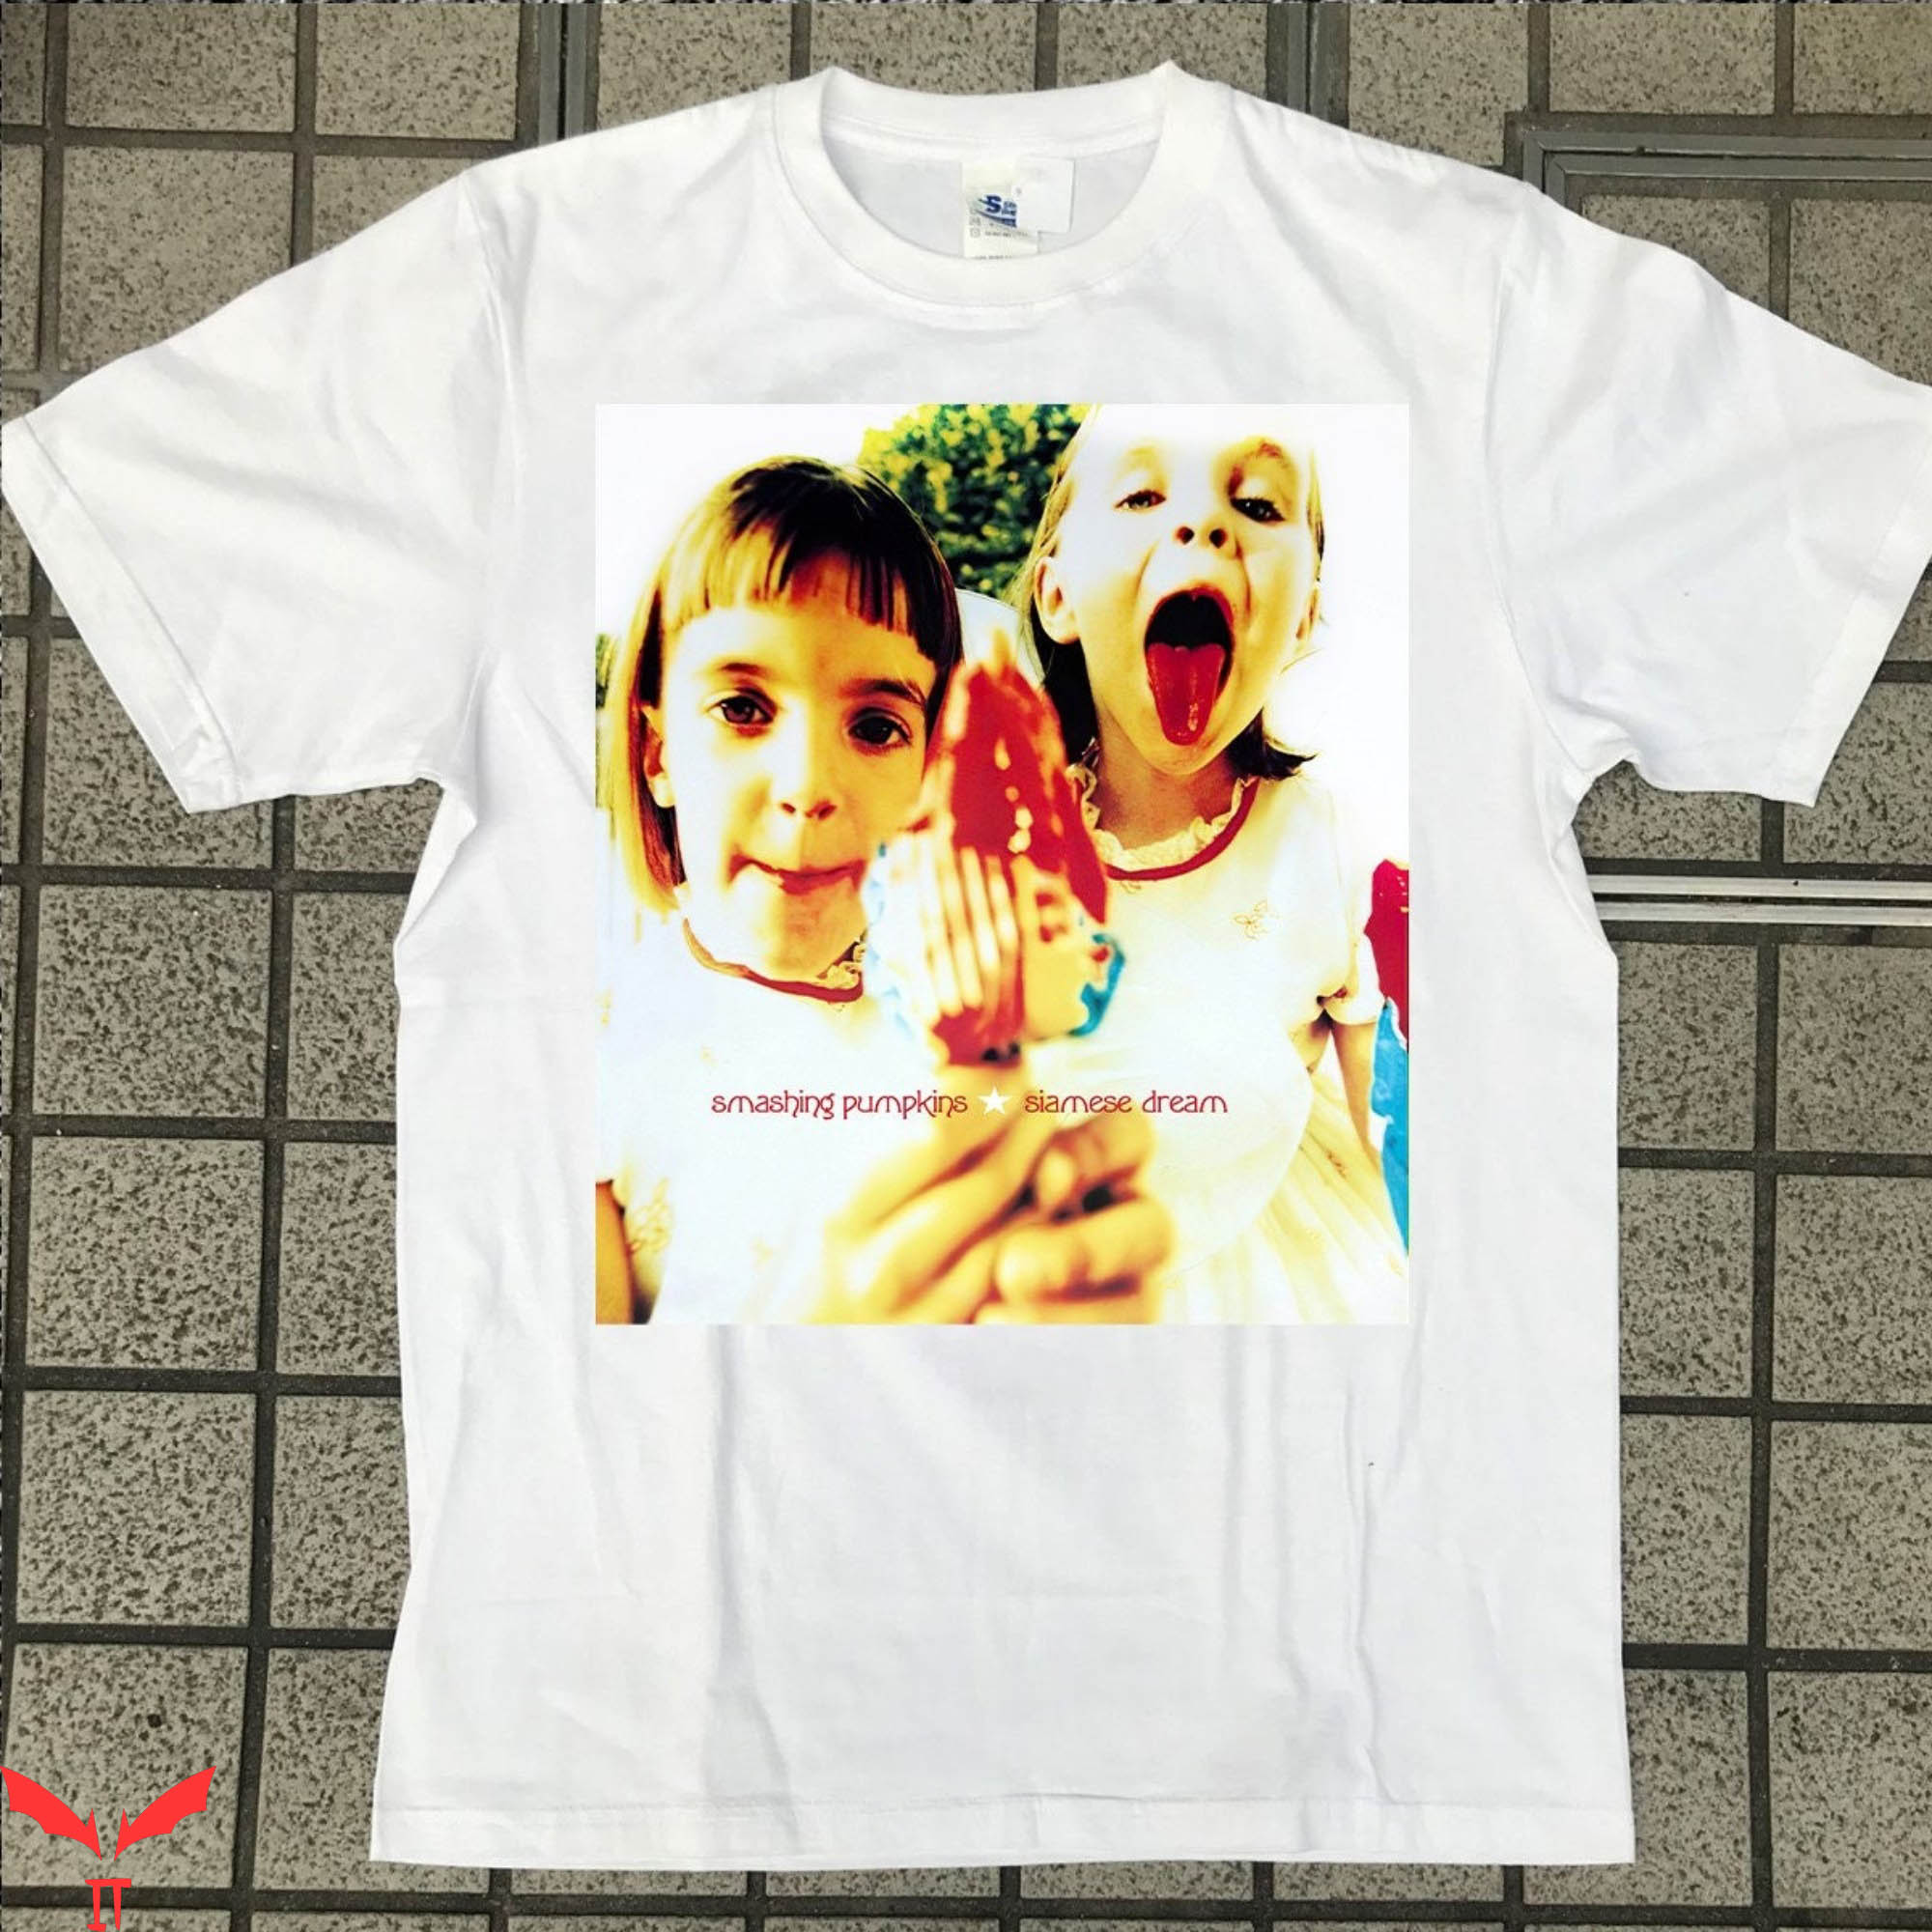 Siamese Dream T-Shirt Smashing Pumpkins Rock Invasion '93